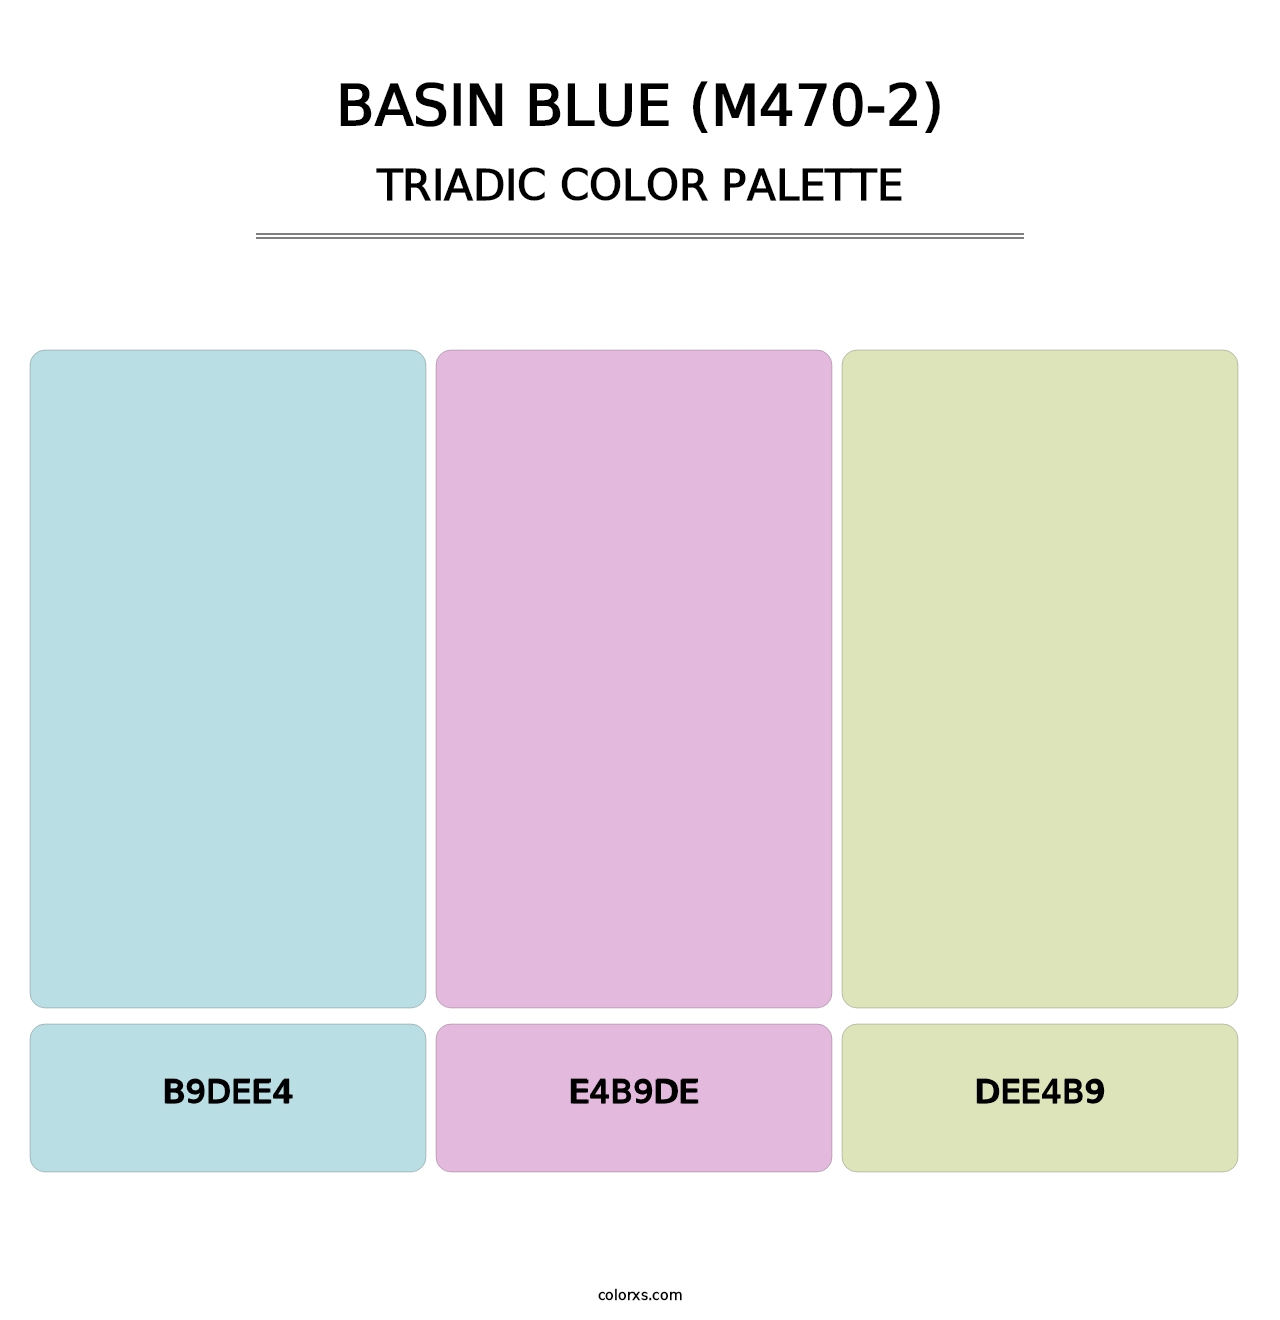 Basin Blue (M470-2) - Triadic Color Palette